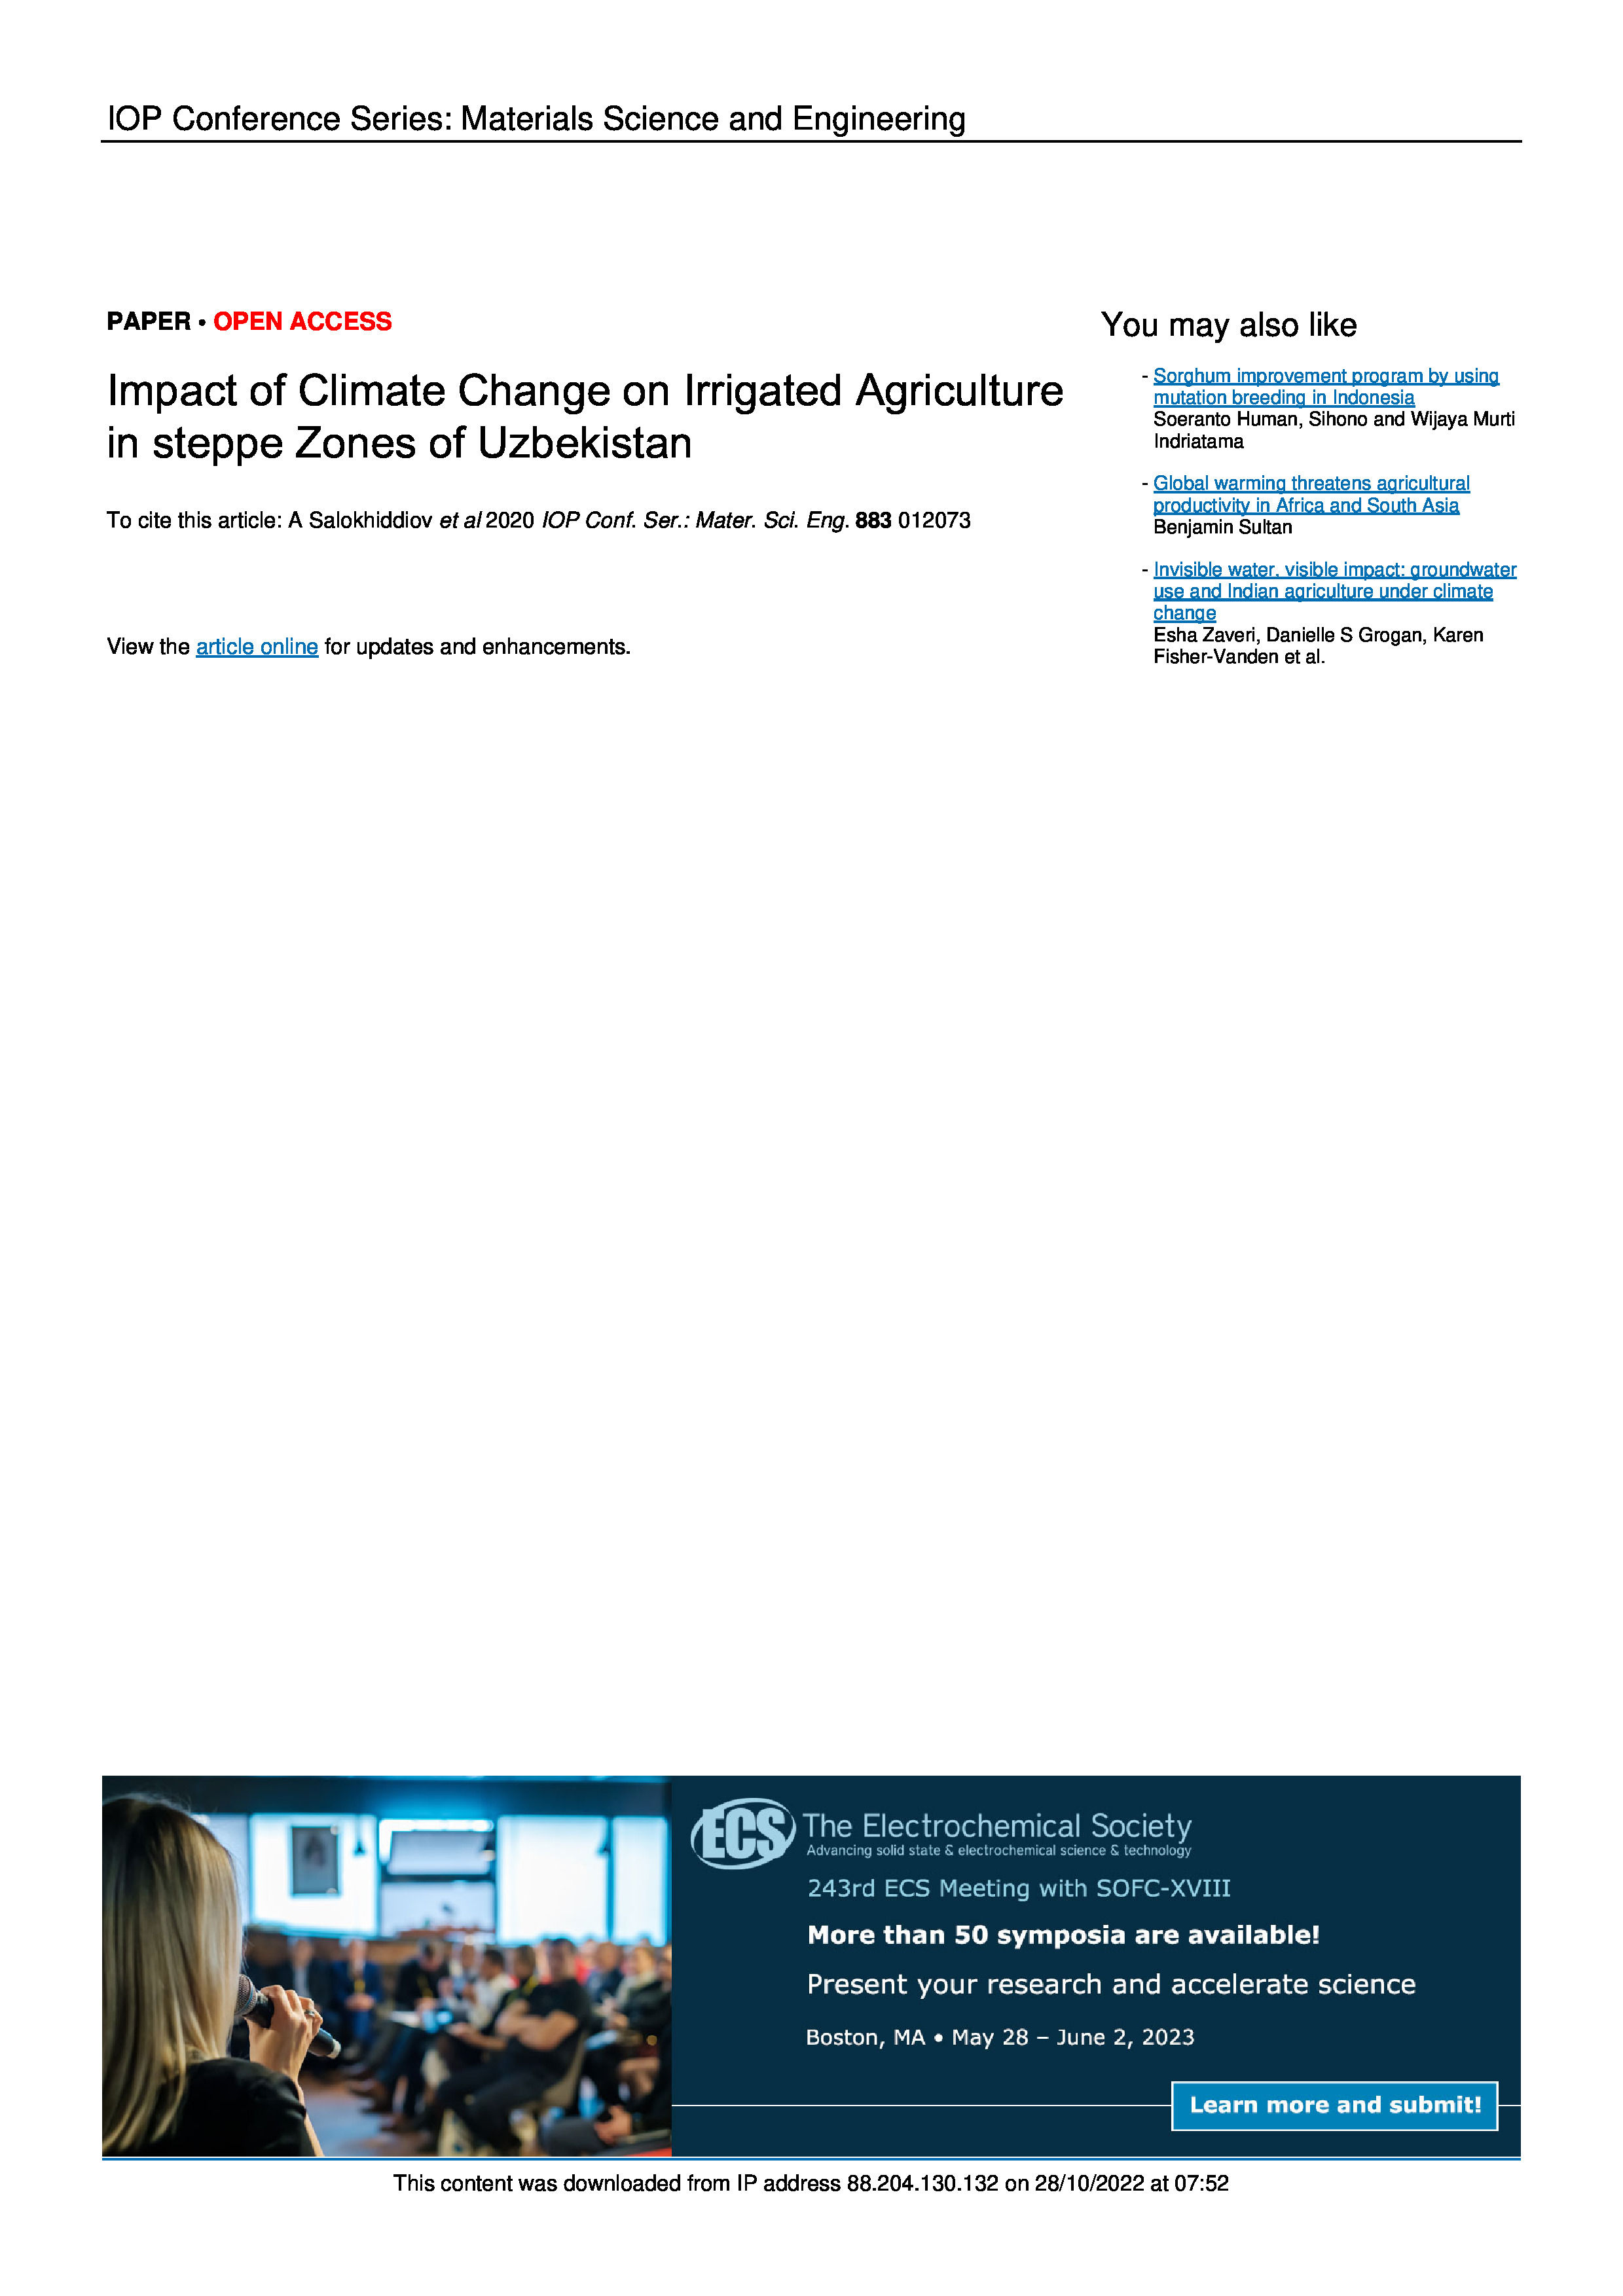 Impact of Climate Change on Irrigated Agriculture in steppe Zones of Uzbekistan | А.Salokhiddiov, P.Khakimova, M.Ismailov, R.Razzakov, J.Mirzaqobulov